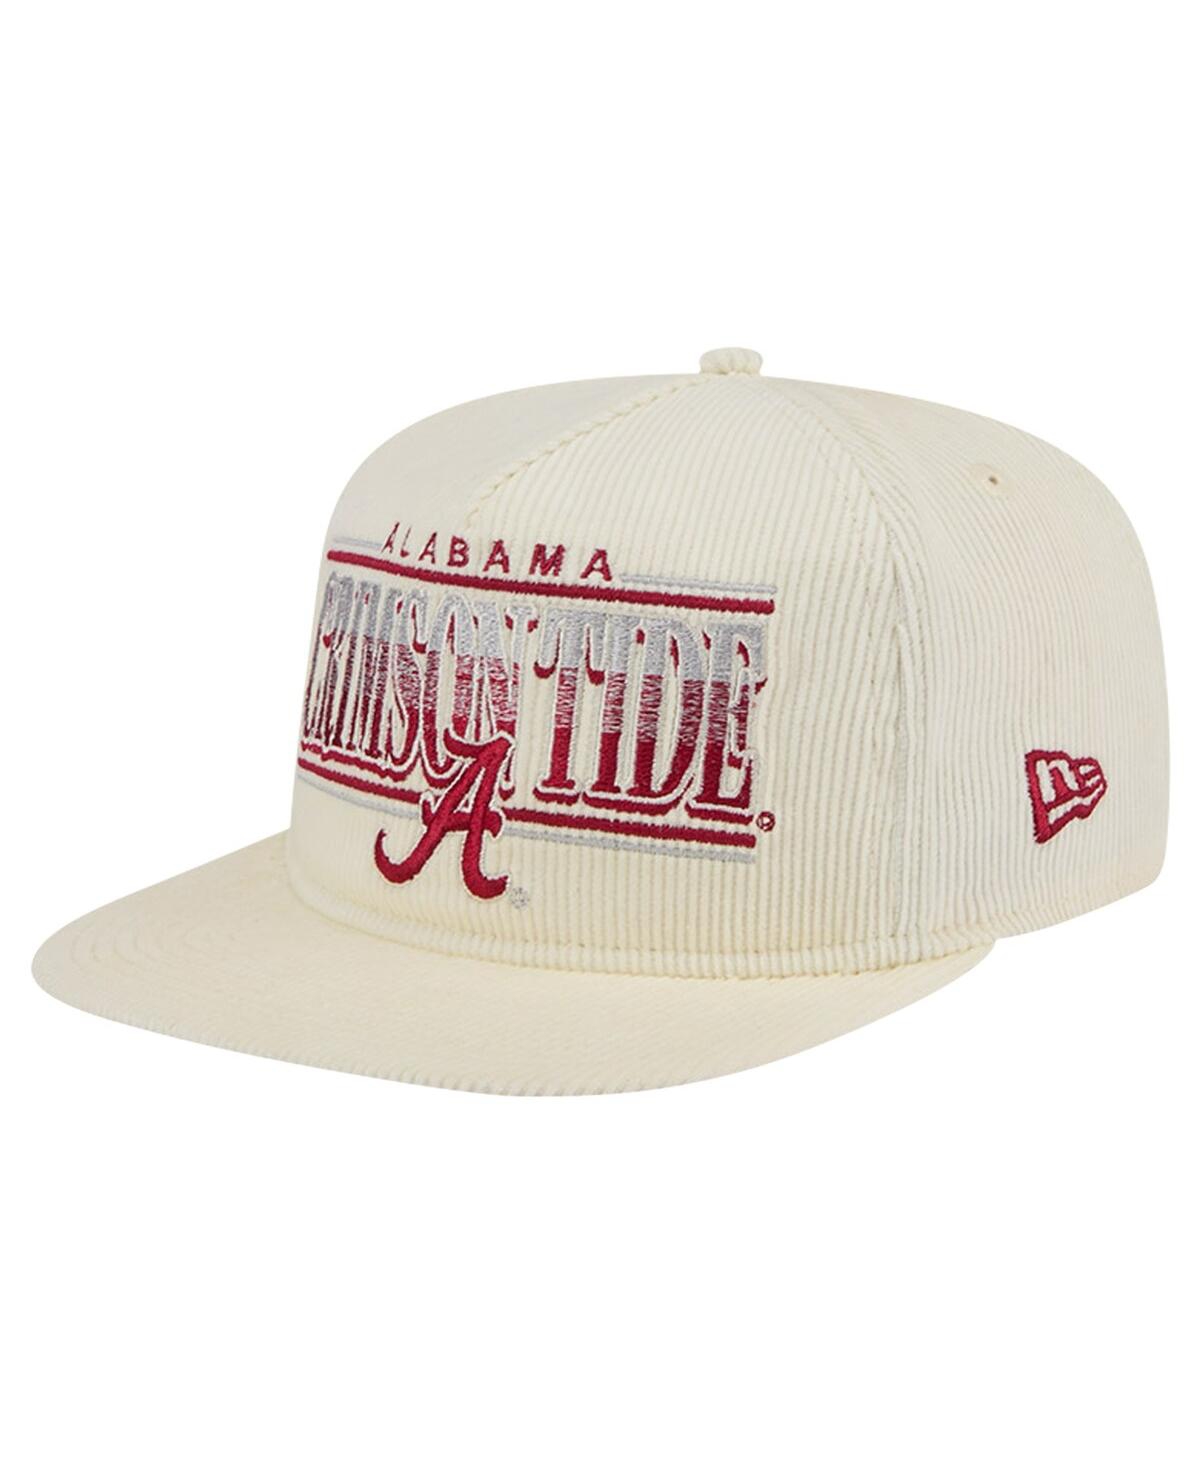 Shop New Era Men's Cream Alabama Crimson Tide Throwback Golfer Corduroy Snapback Hat